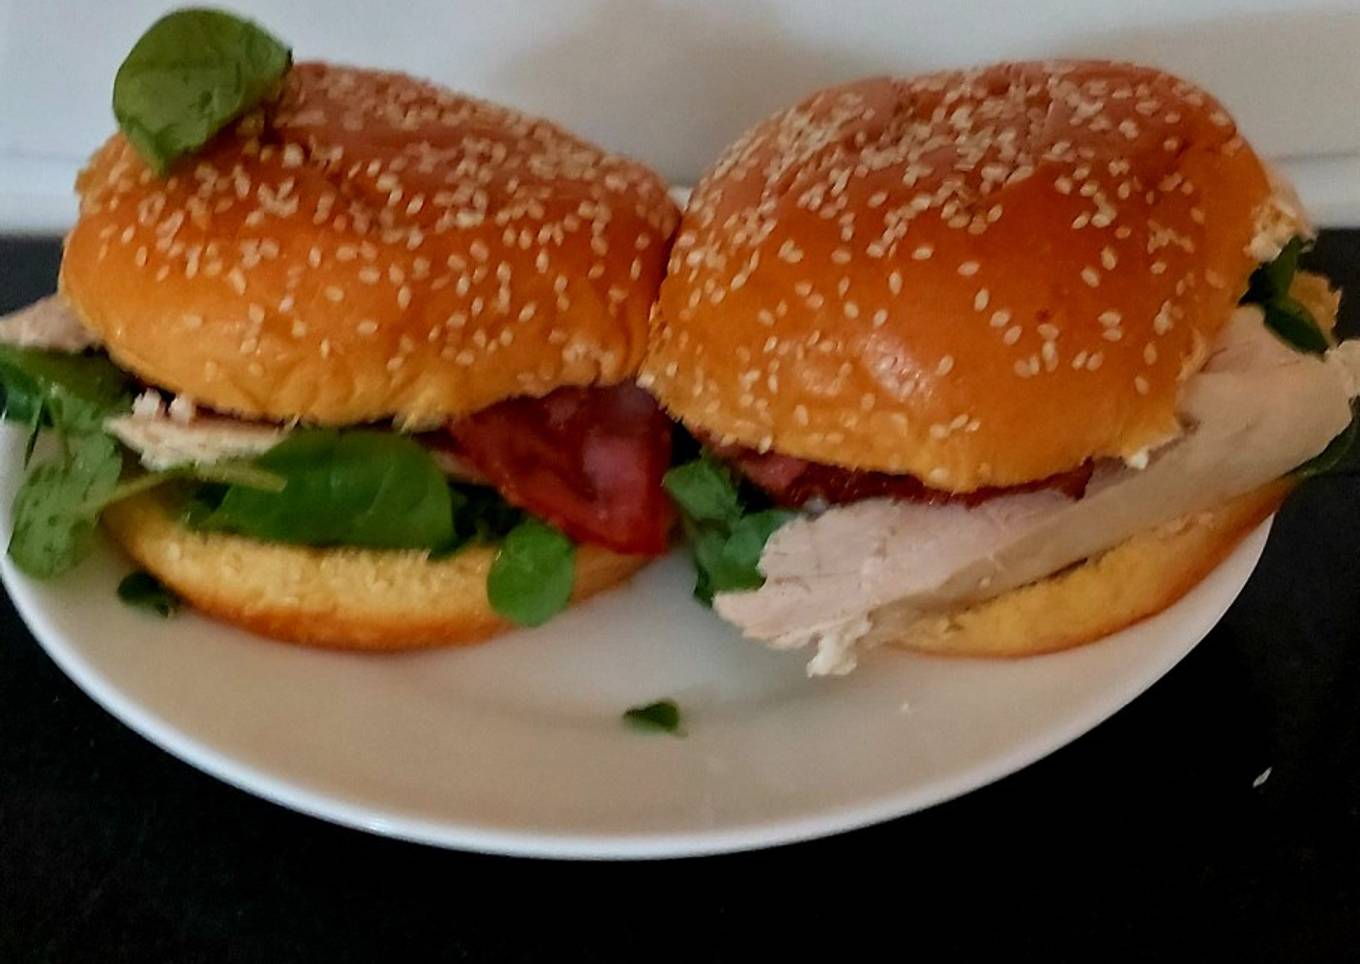 My Chicken & Bacon Sandwich 😍#Lunch #2Flavours